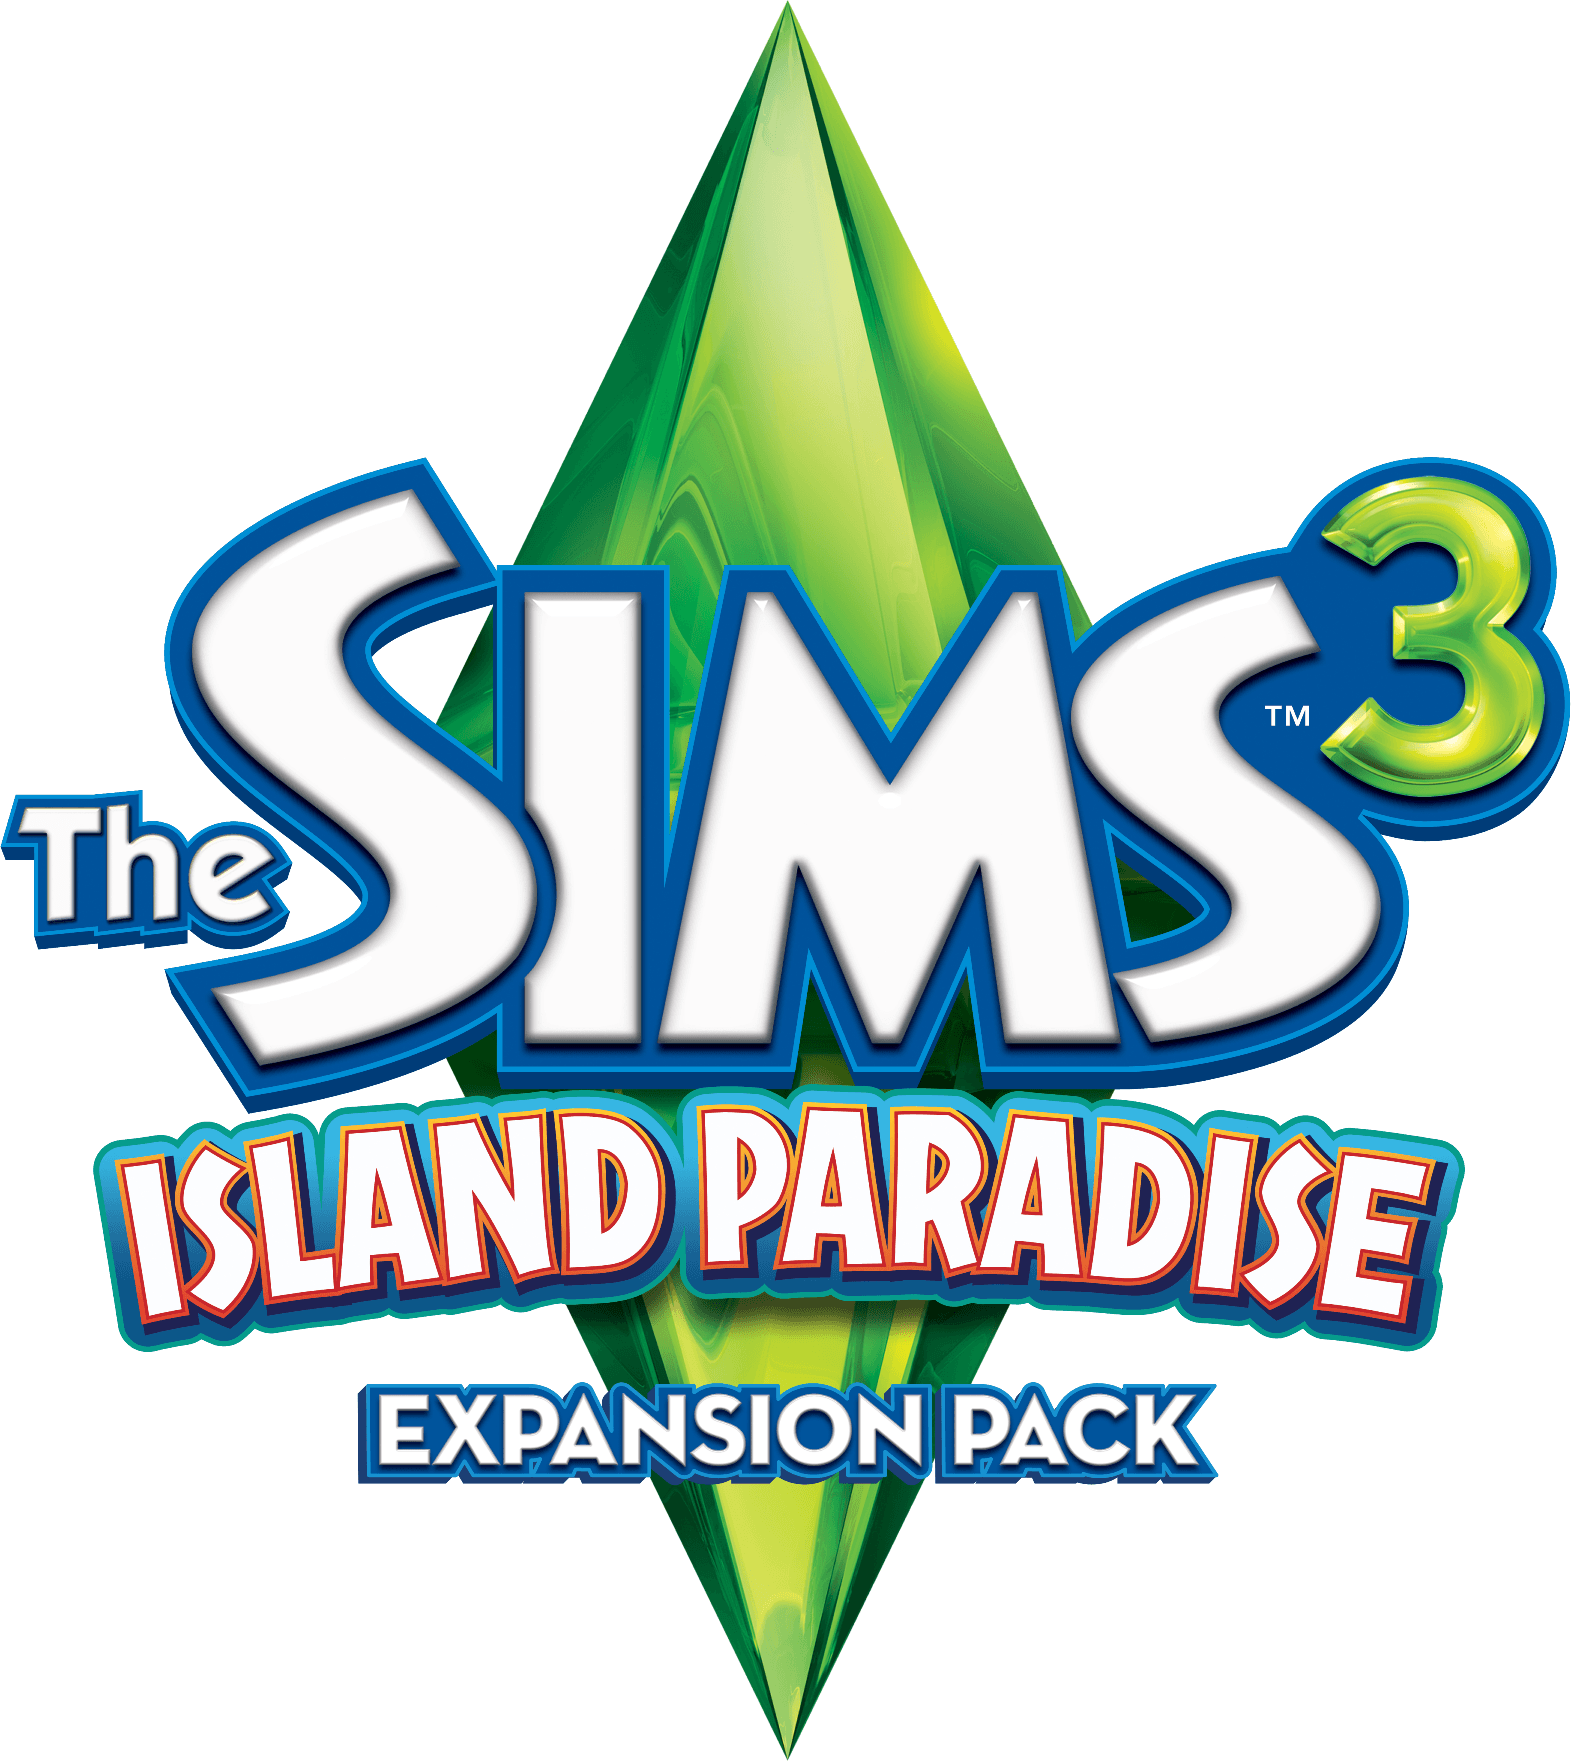 Sims 3 Logo - The Sims 3: Island Paradise | Logopedia | FANDOM powered by Wikia